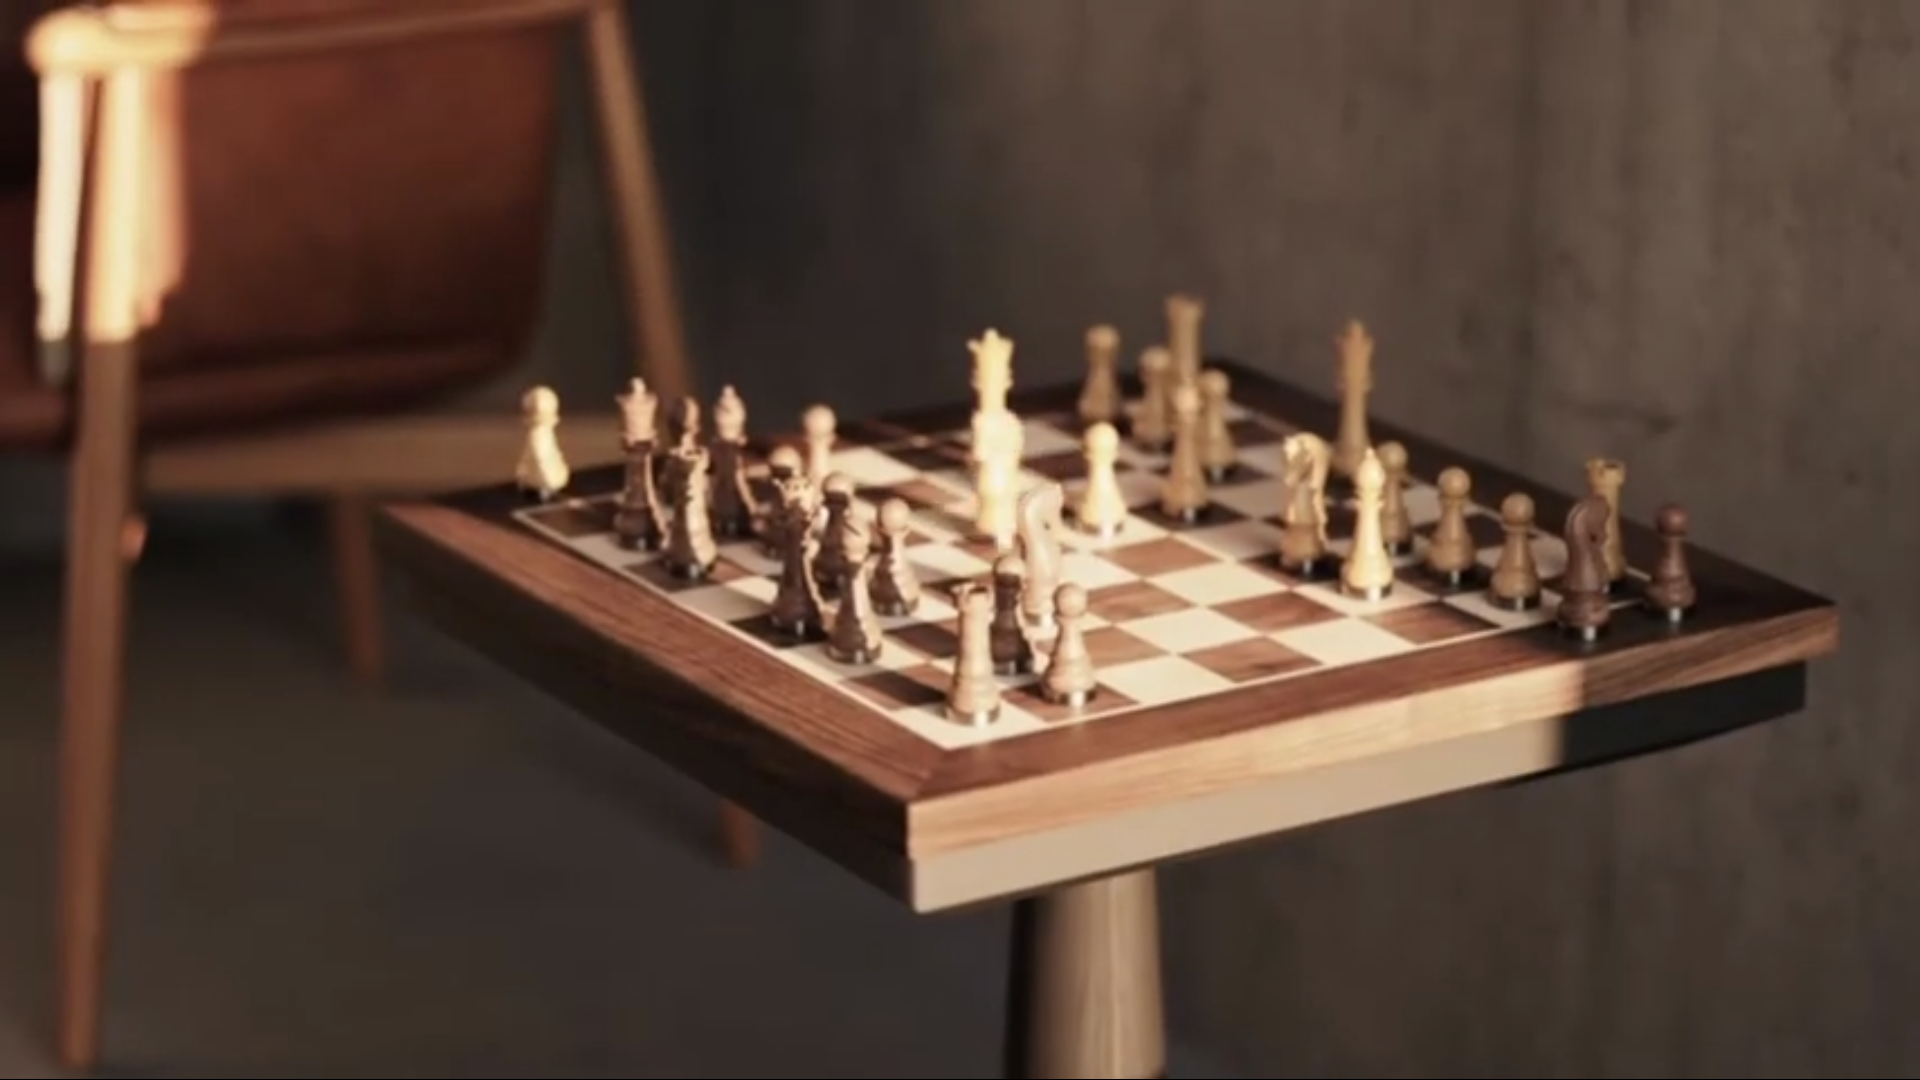 Jogar xadrez contra um fantasma